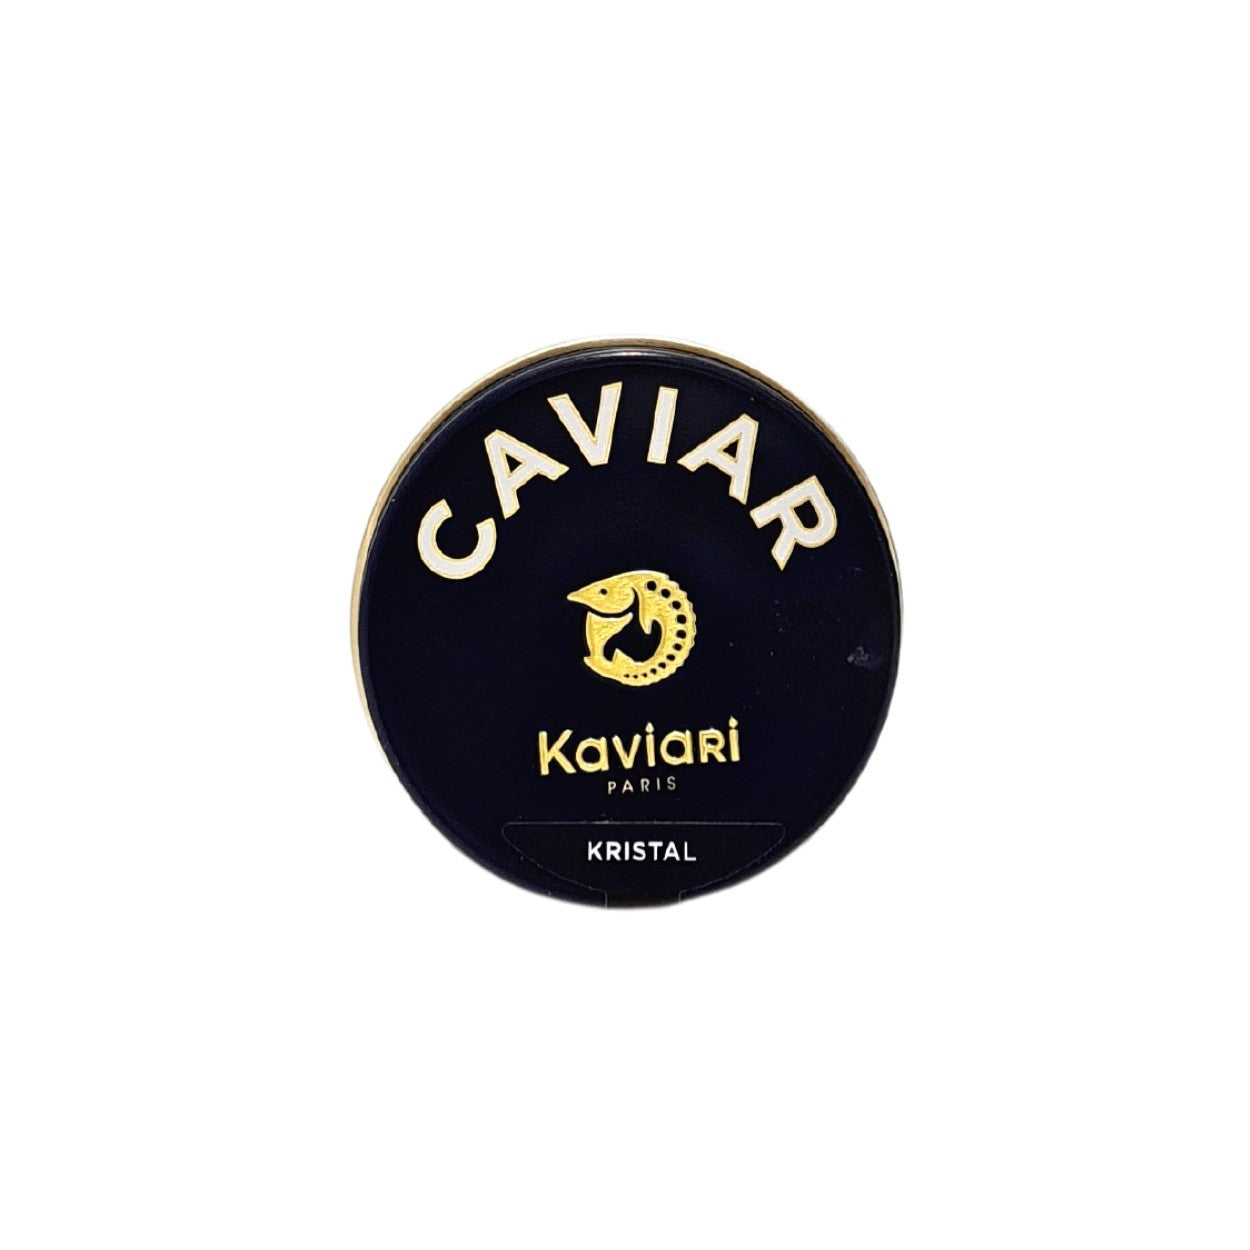 Caviar Kaviari Kristal. Kaviari